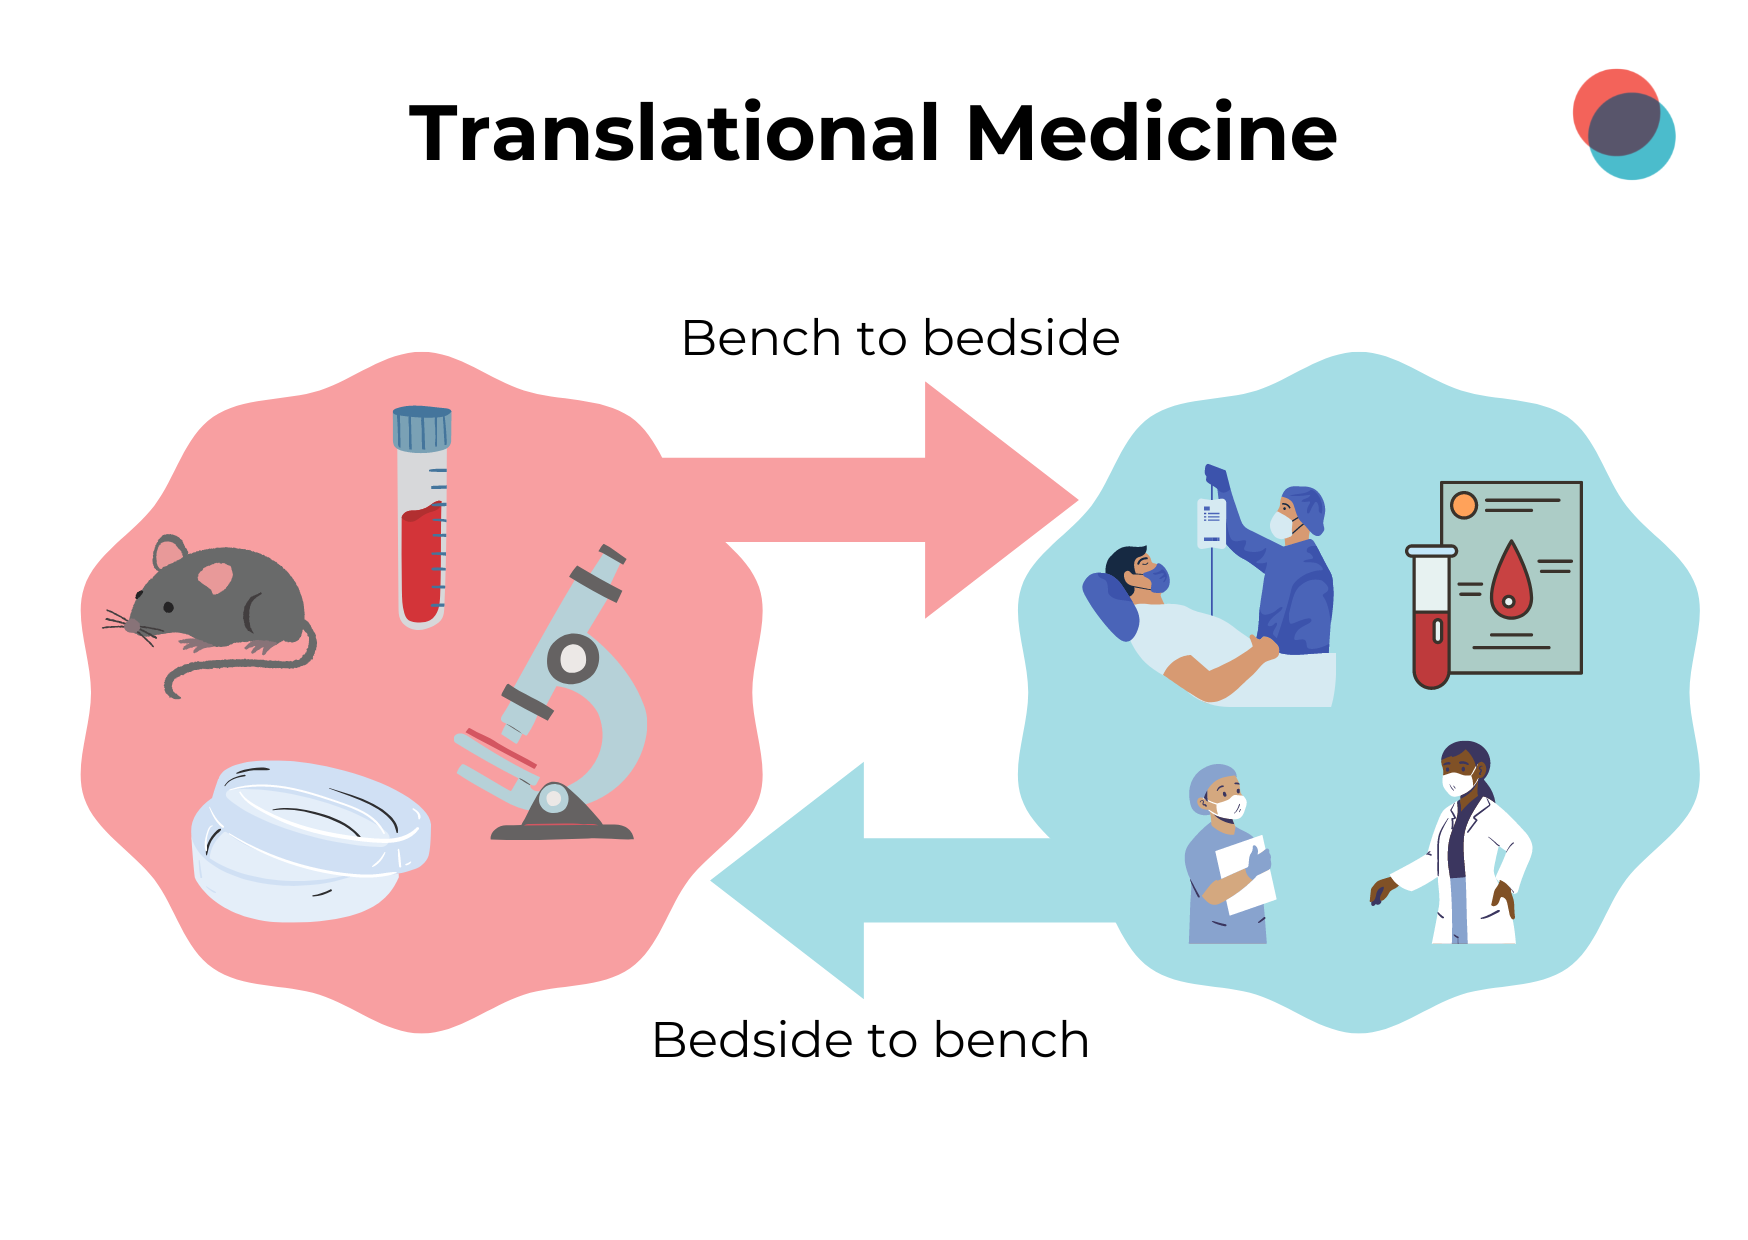 Transslational medicine